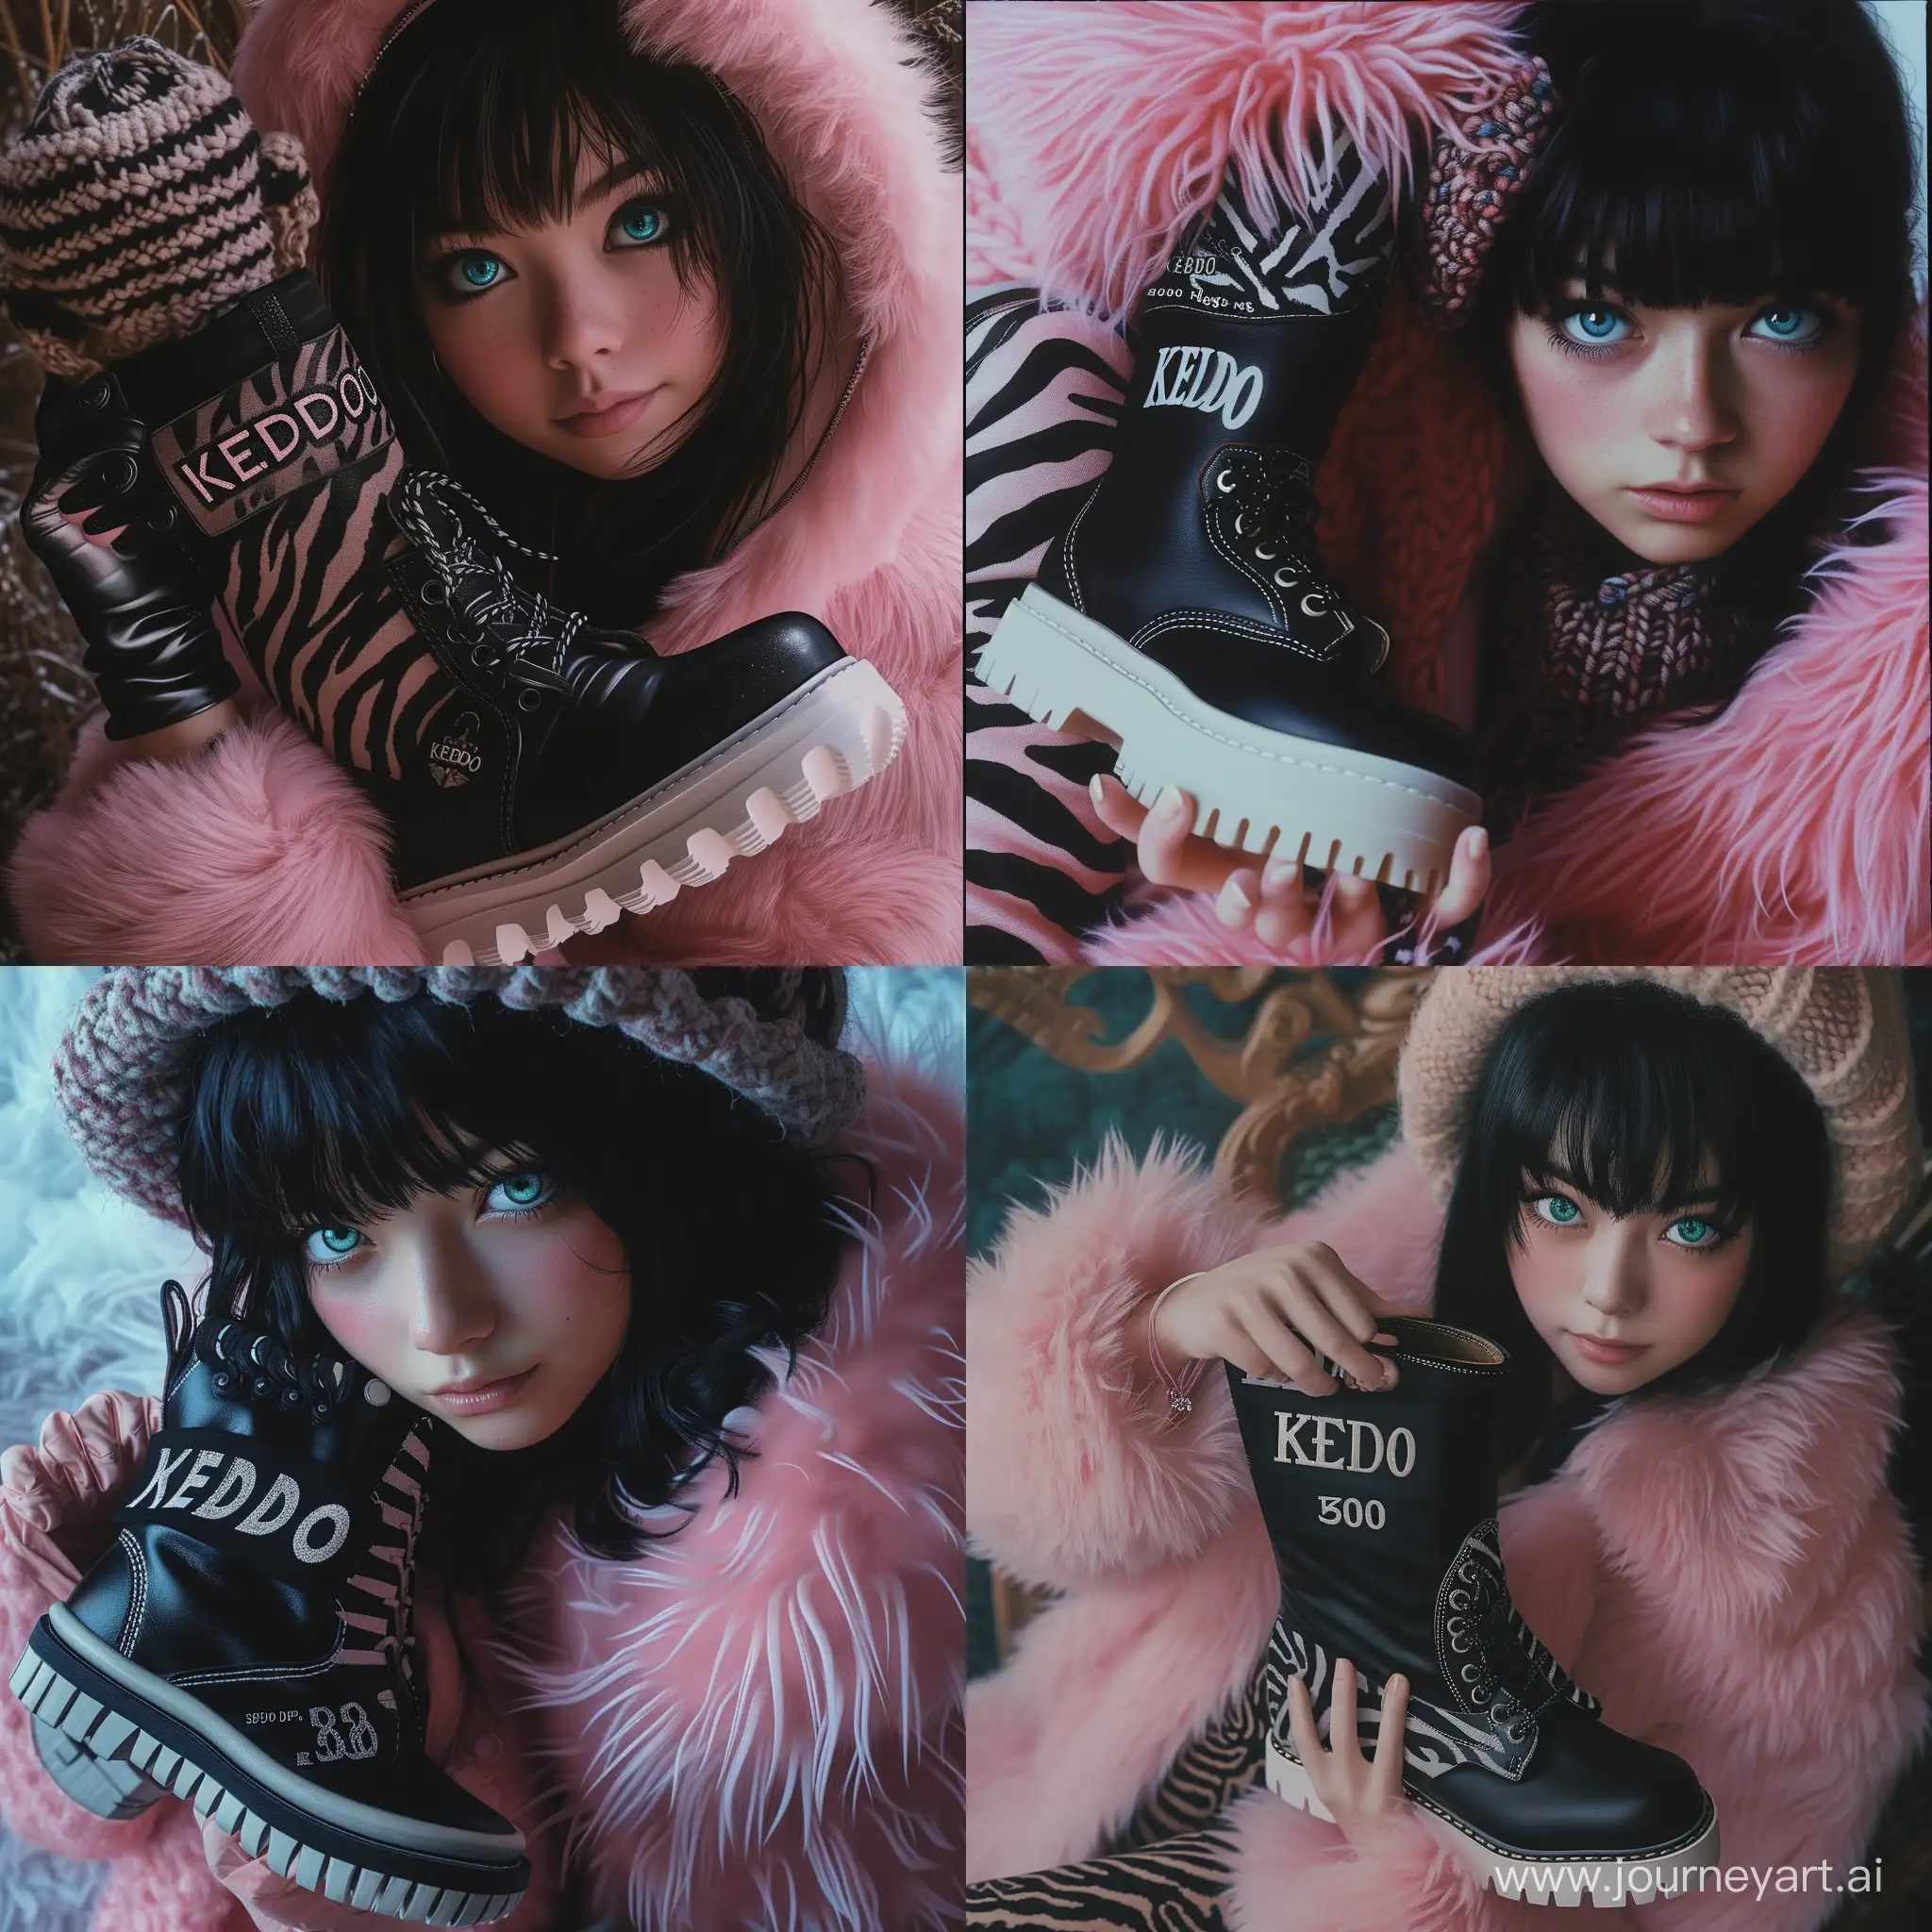 Girl-Holding-KEDDO-Boots-in-Pink-Fur-Coat-Portrait